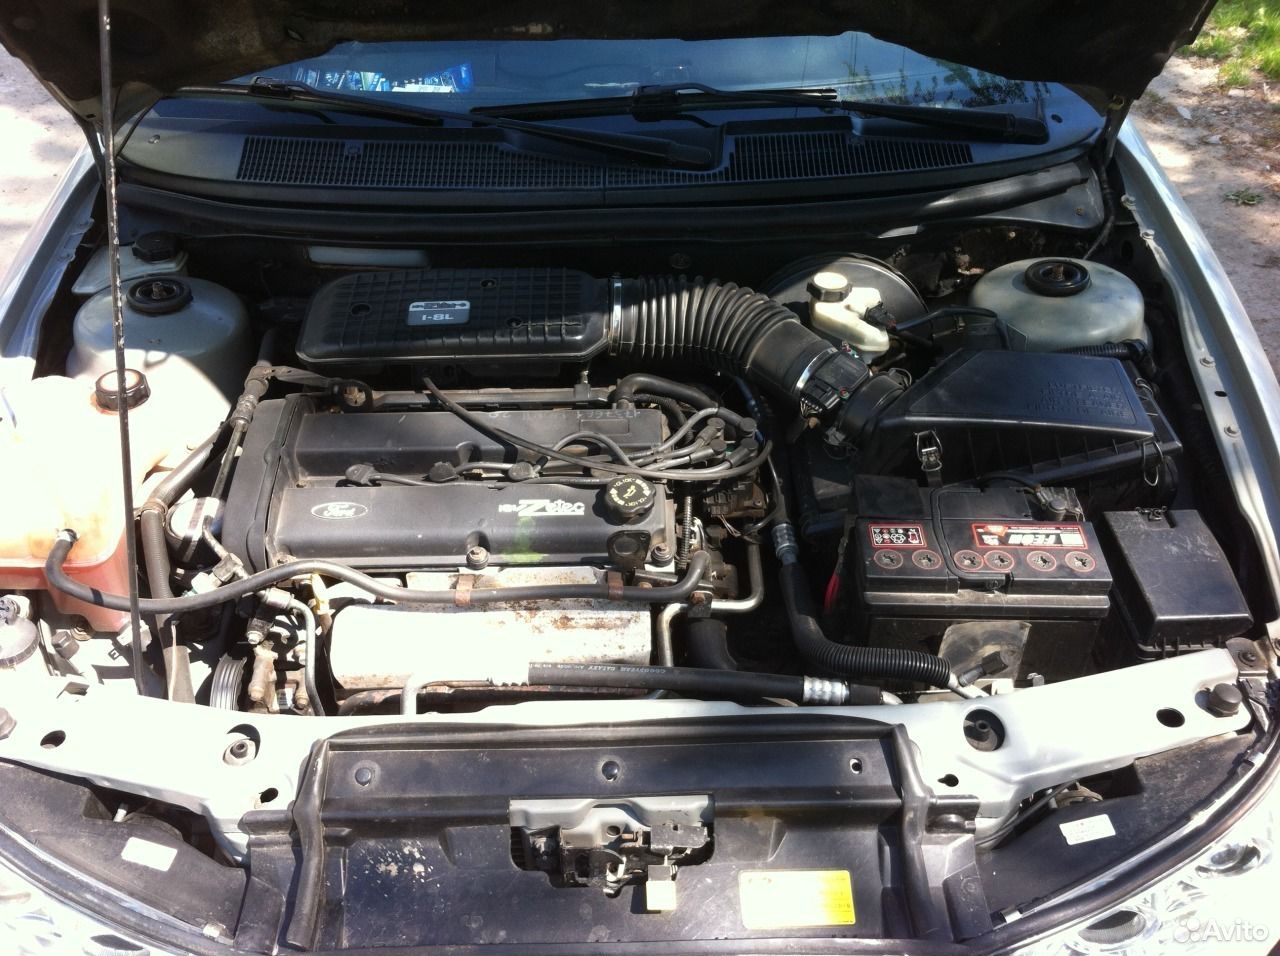 Форд Эксплорер 2003 год, 4 литра, 4 вд, расход 11-20, V6 ...